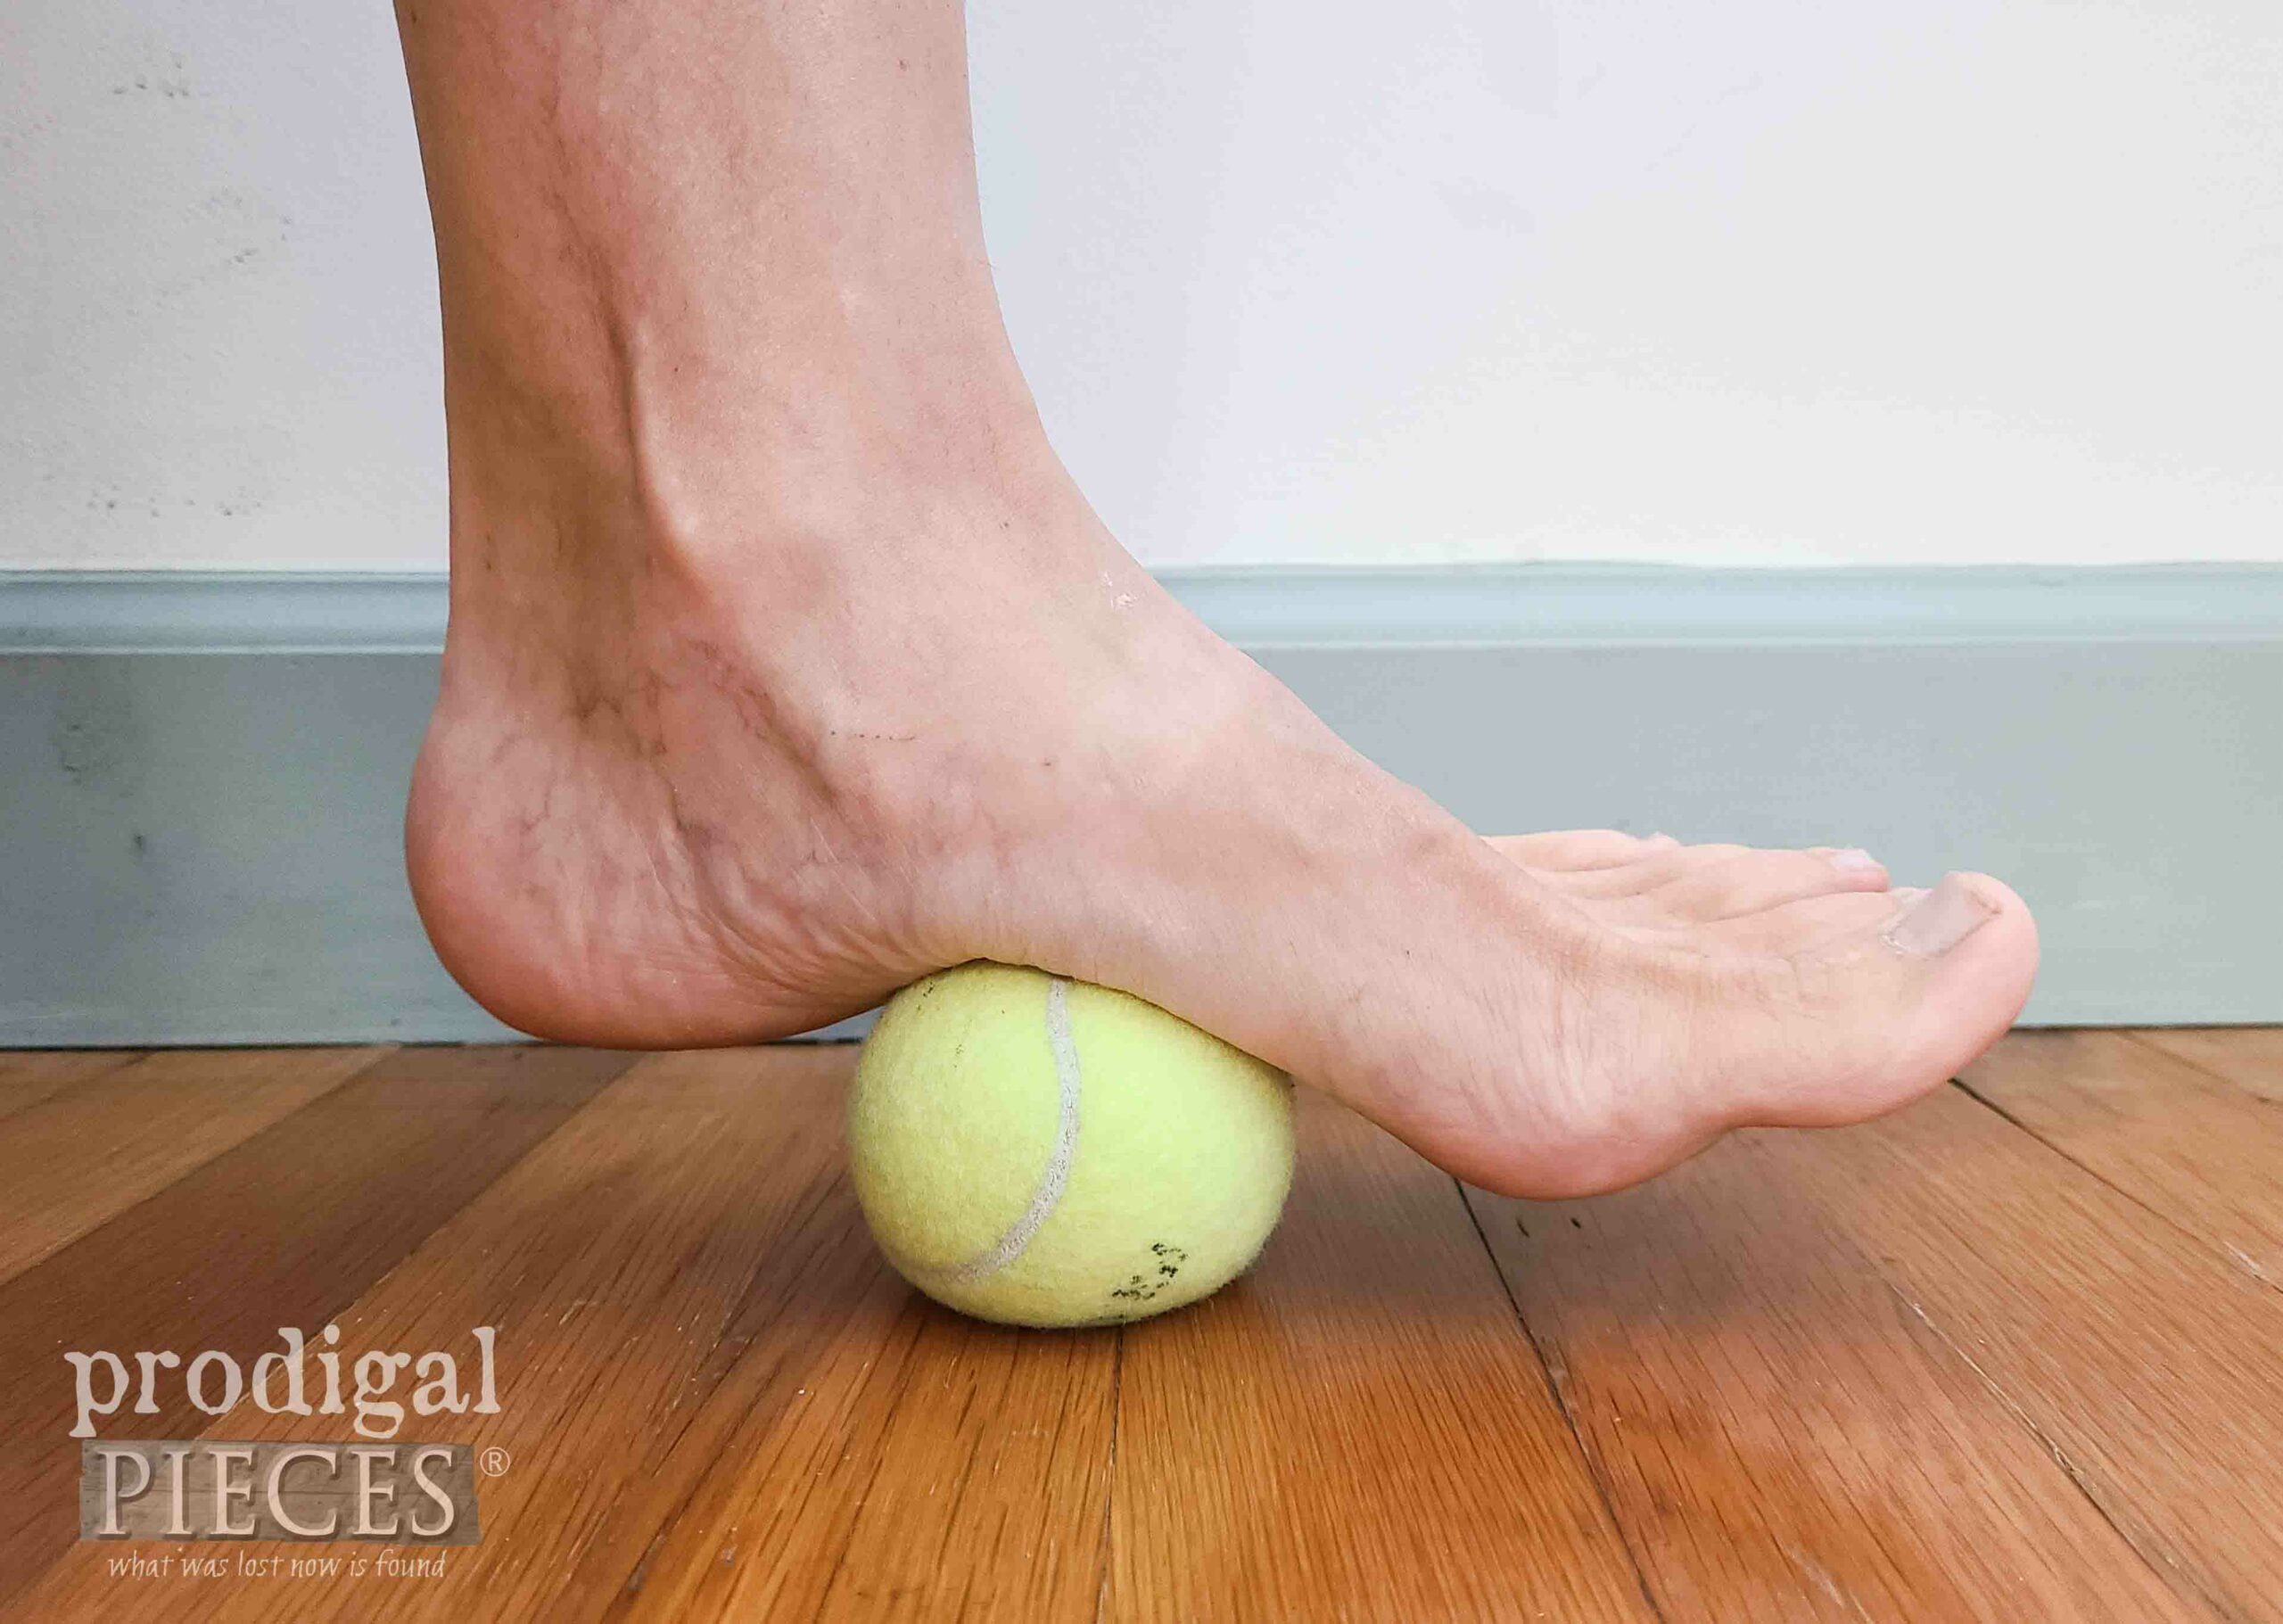 Massagin Foot with Tennis Ball | My Barefoot Journey Intro | prodigalpieces.com #prodigalpieces